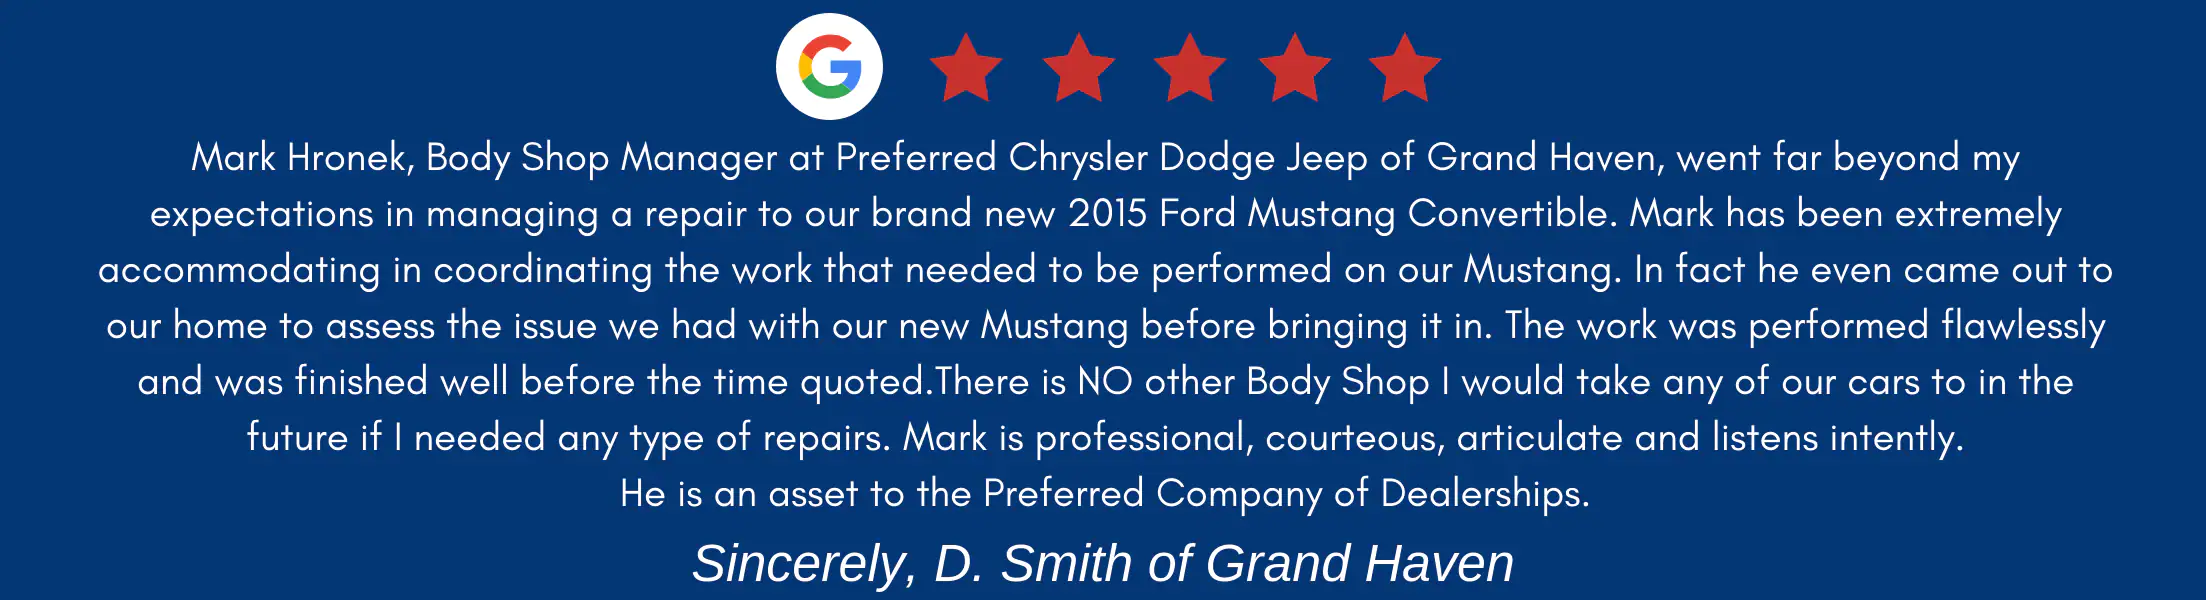 Preferred Chrysler Dodge Jeep Ram of Grand Haven